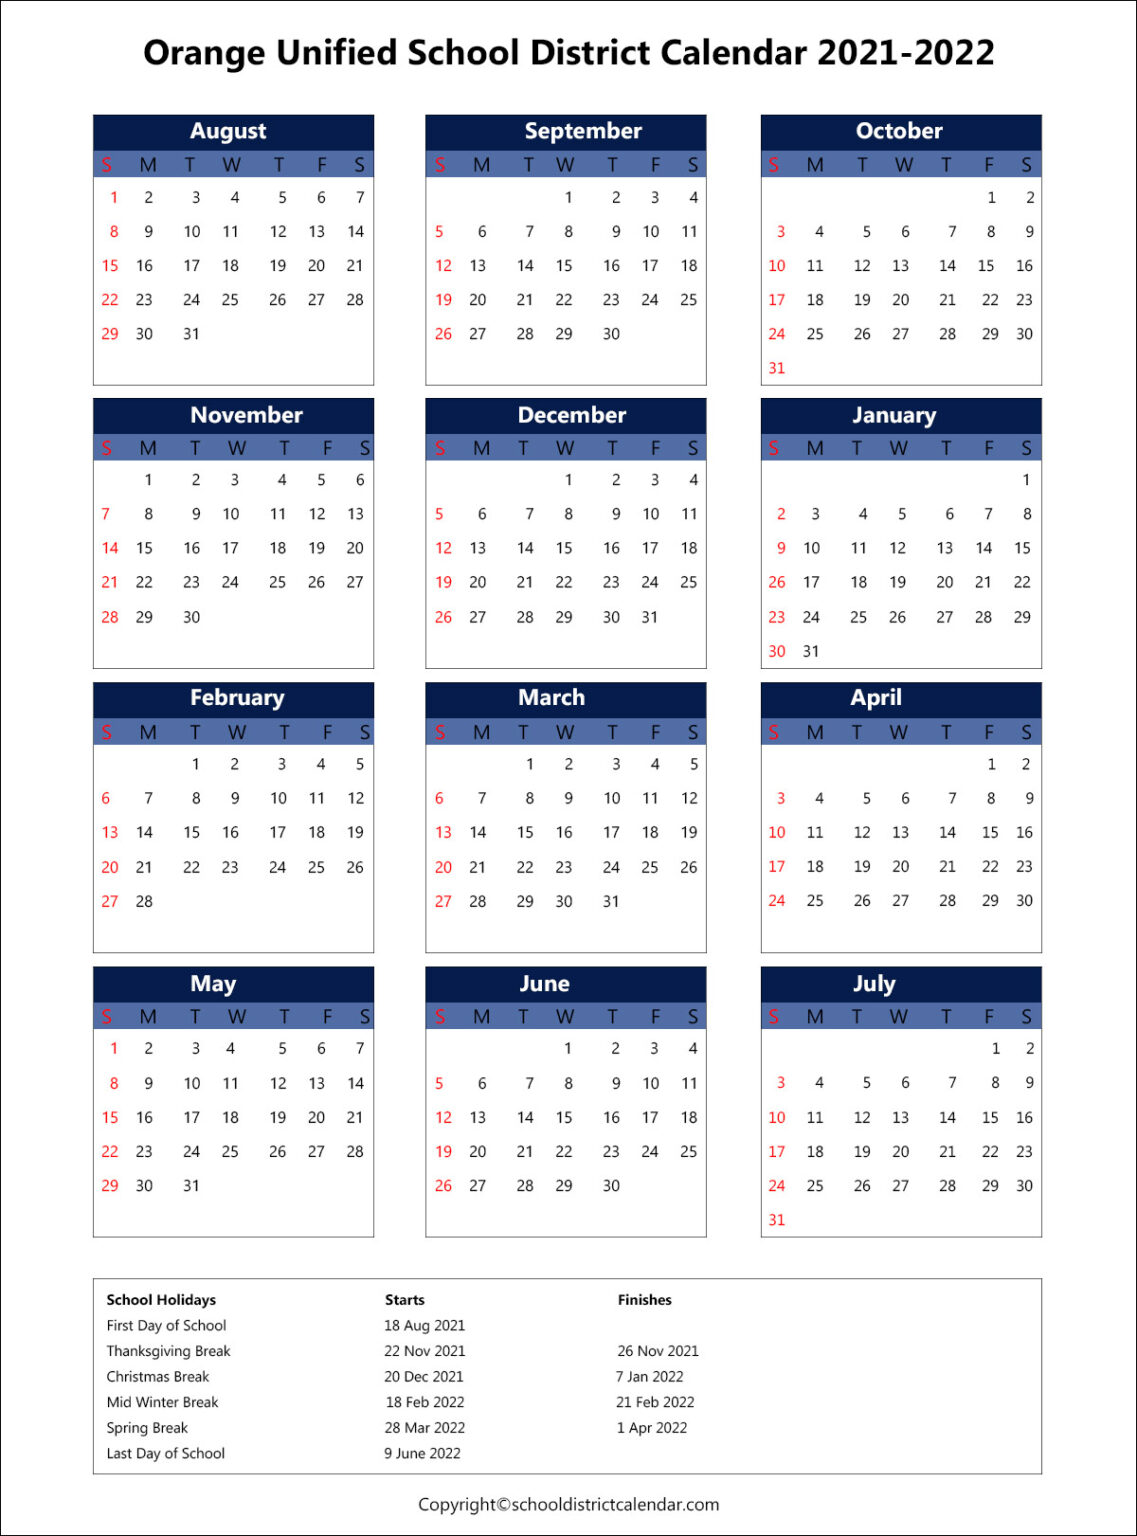 Orange Unified School District Schedule Archives - School District Calendar